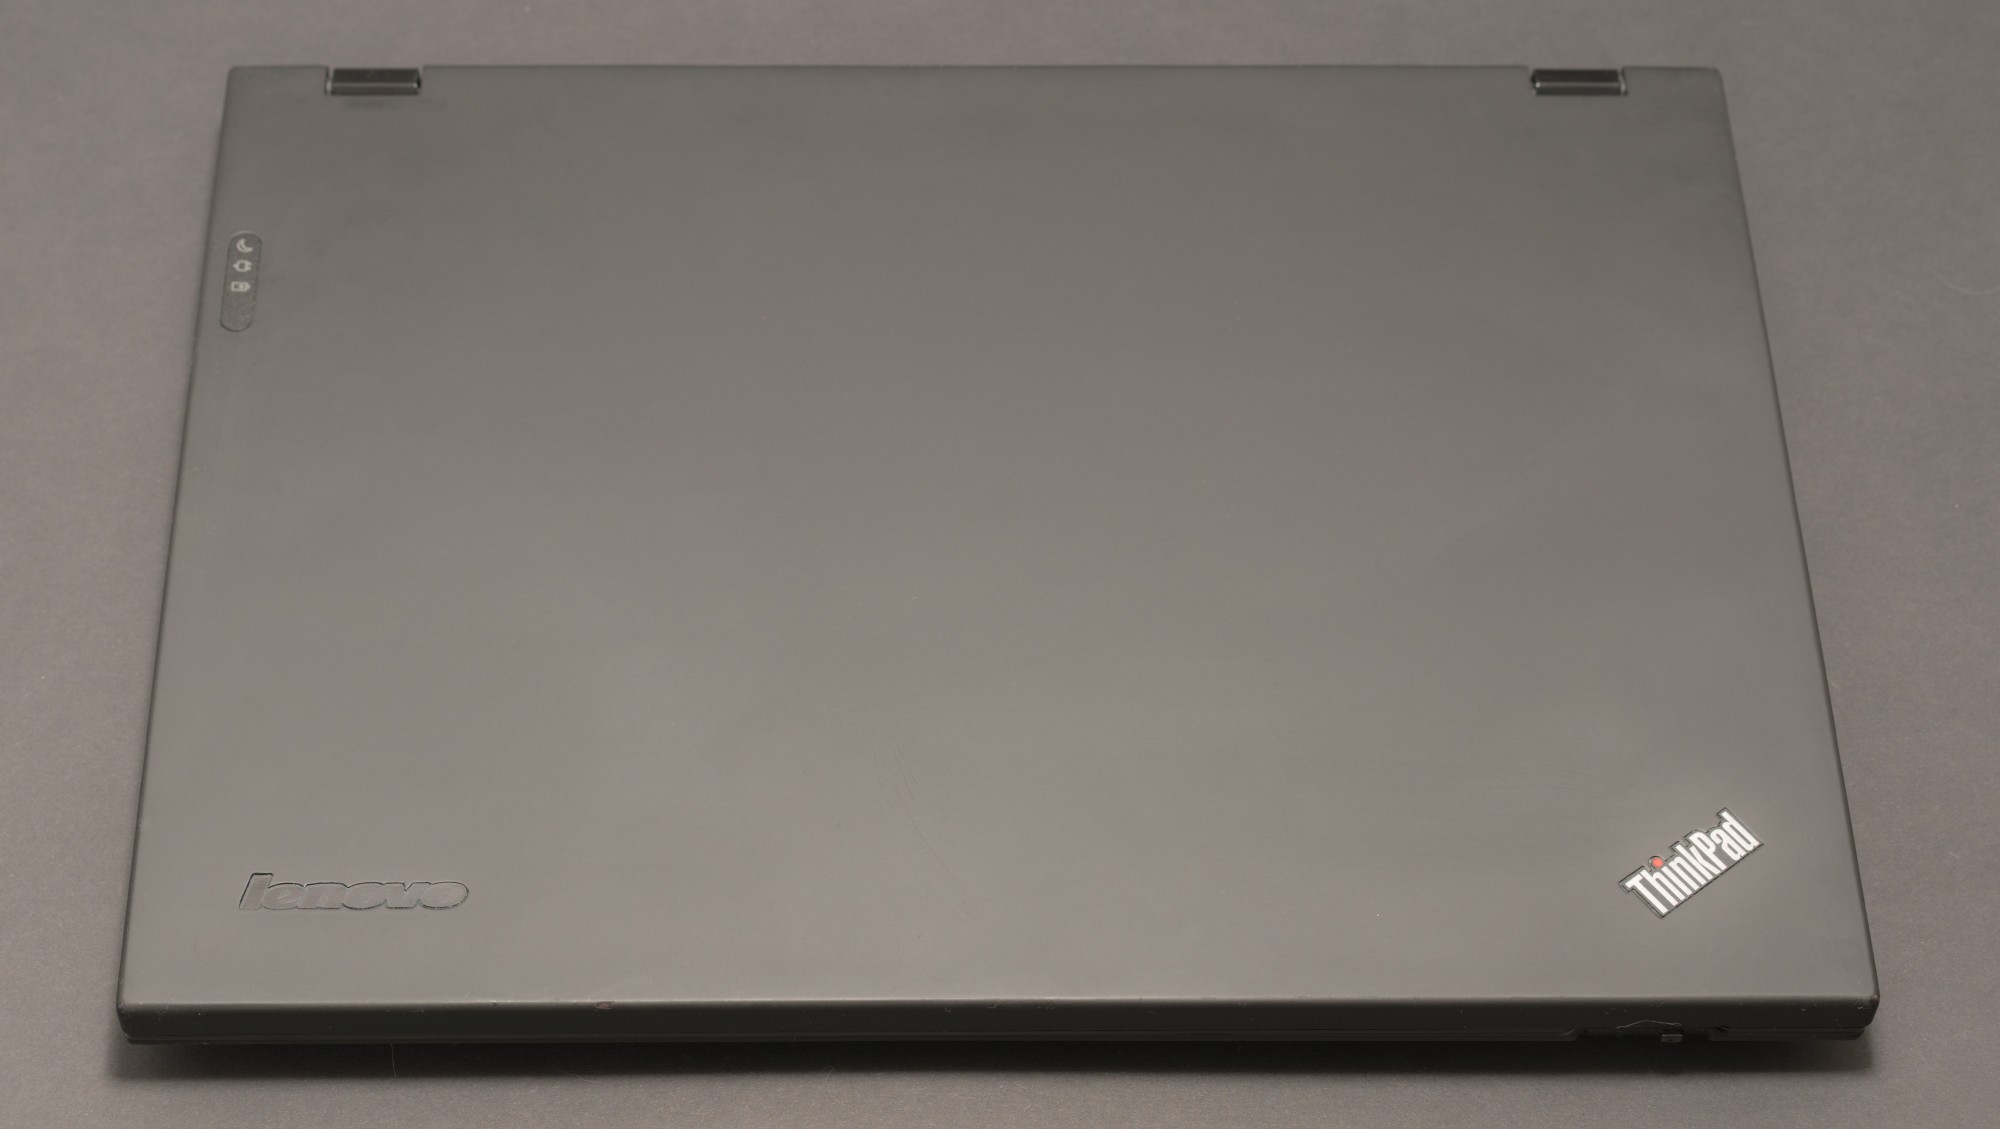 Древности: десять лет эволюции ноутбуков на примере ThinkPad X301 - 16